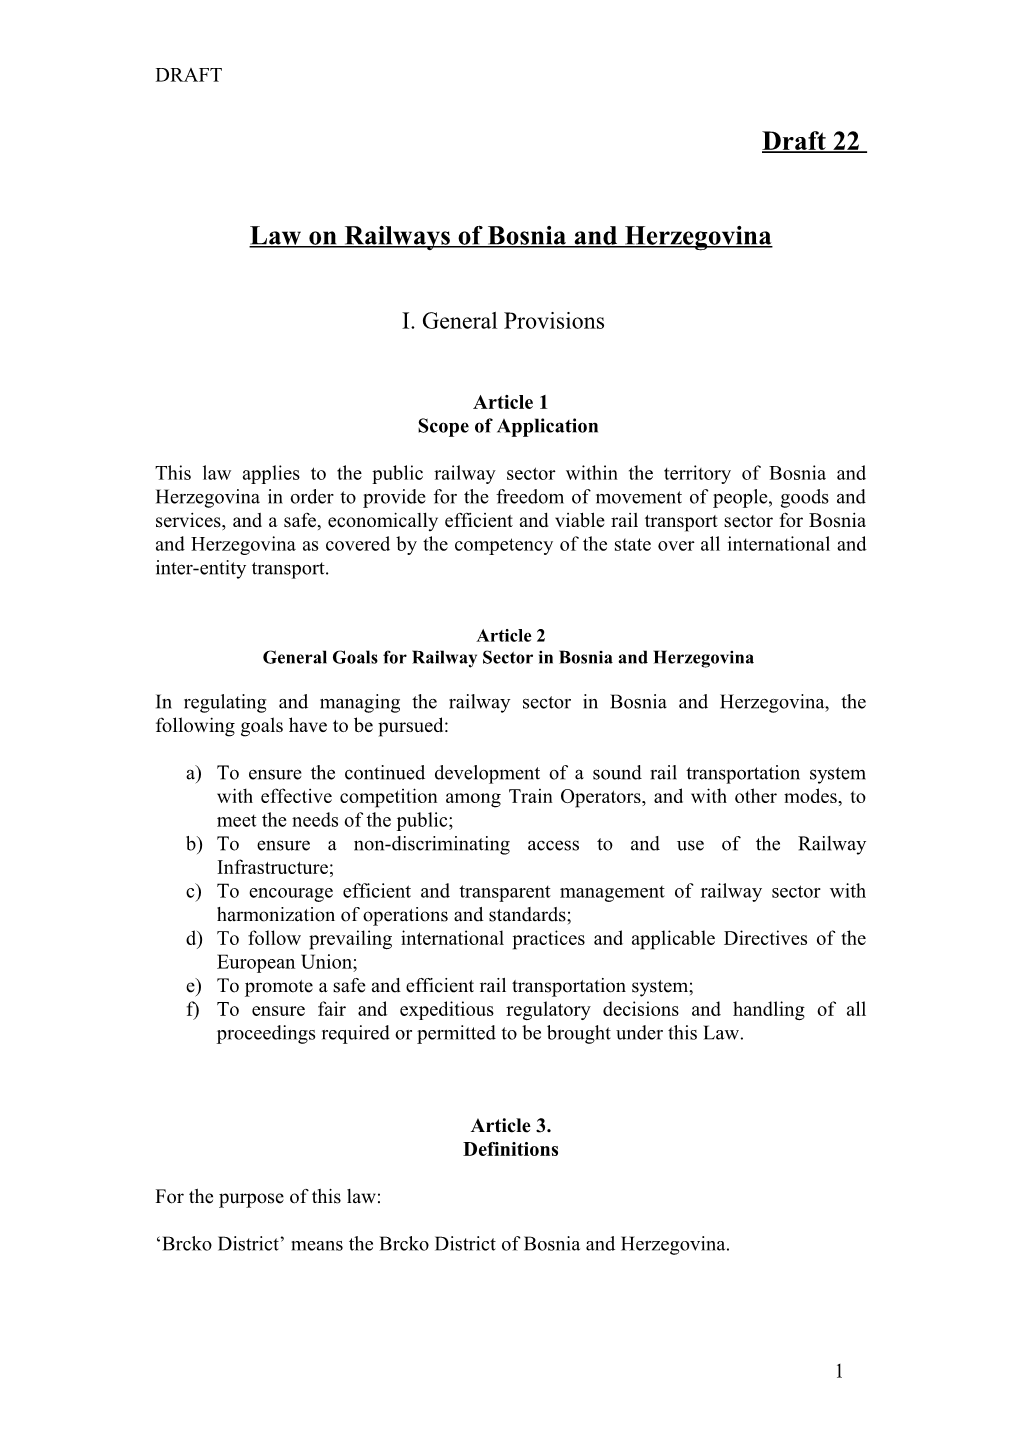 Law on Railways of Bosnia and Herzegovina